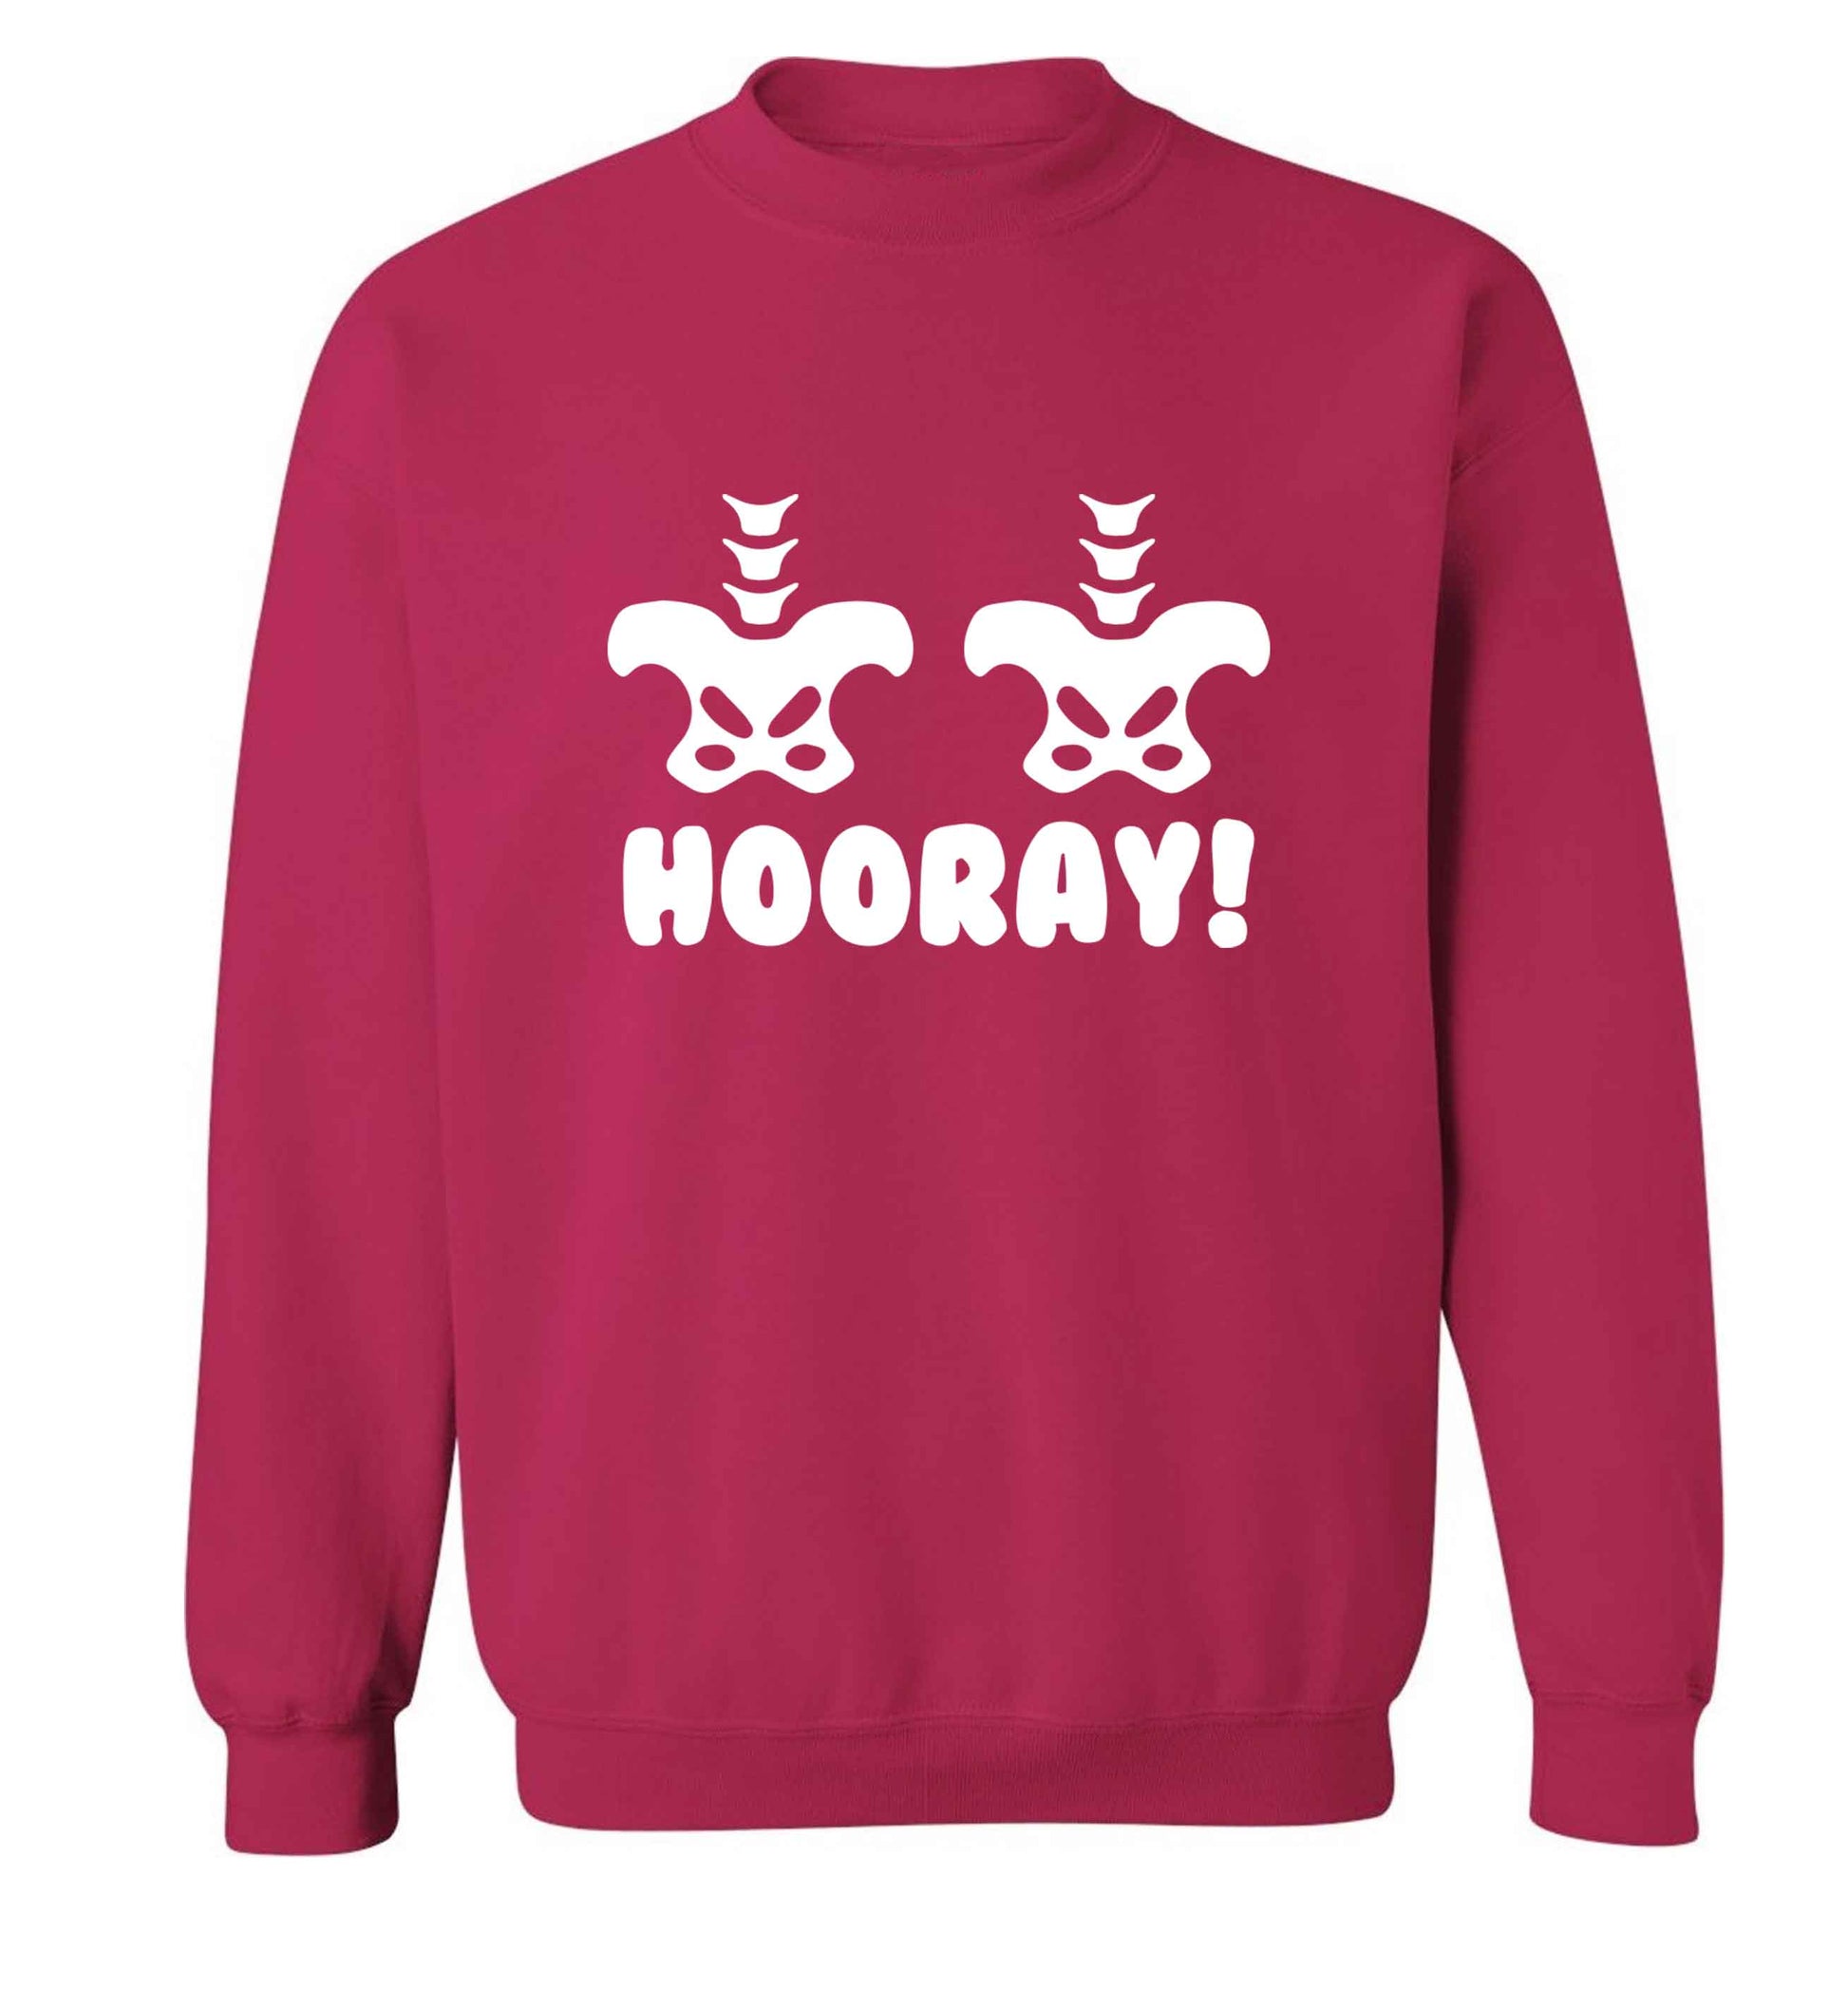 Hip Hip Hooray! adult's unisex pink sweater 2XL